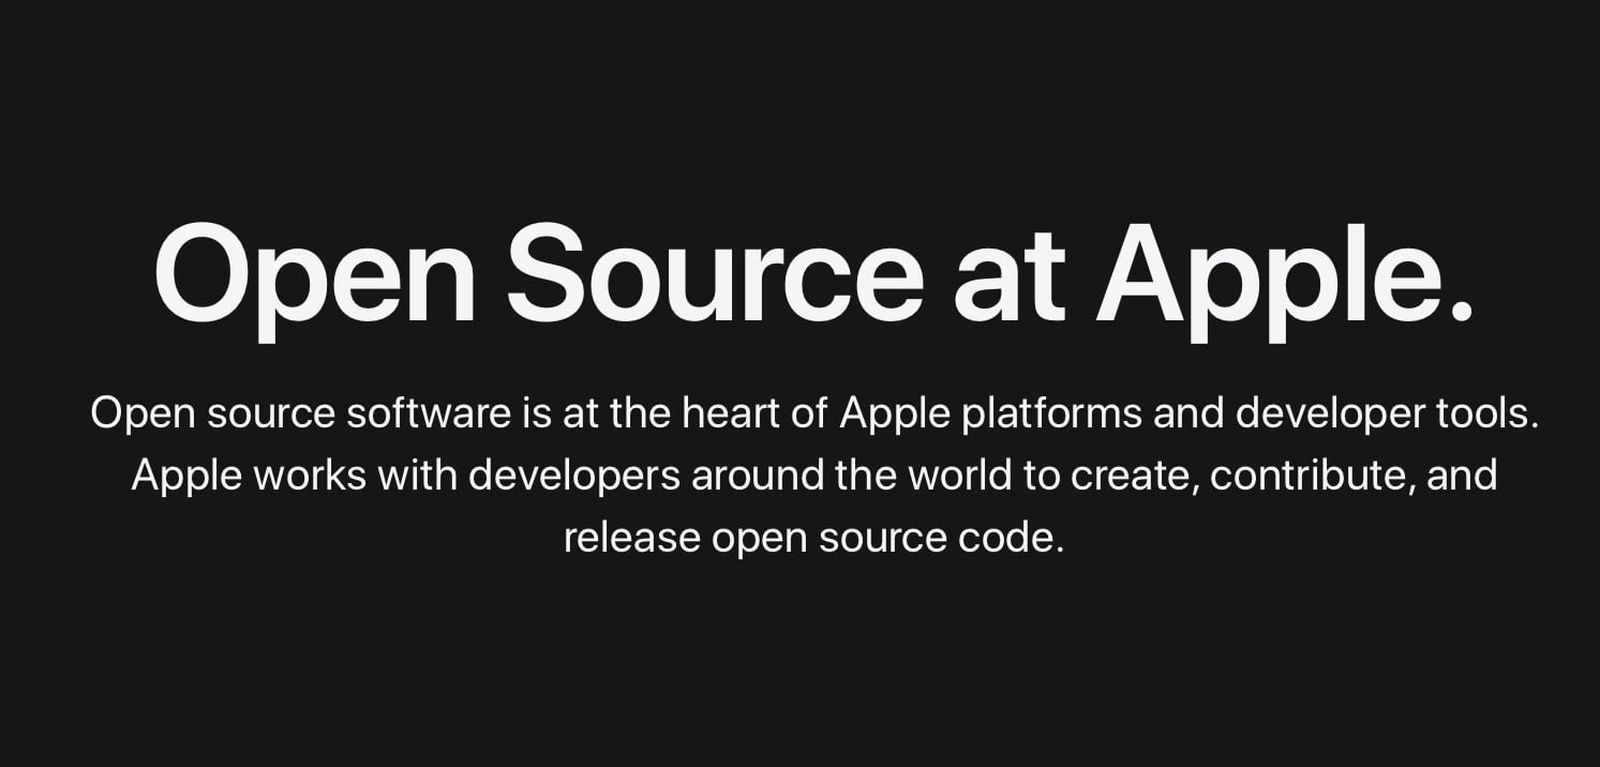 Apple Launches Redesigned Open Source Website - MacRumors